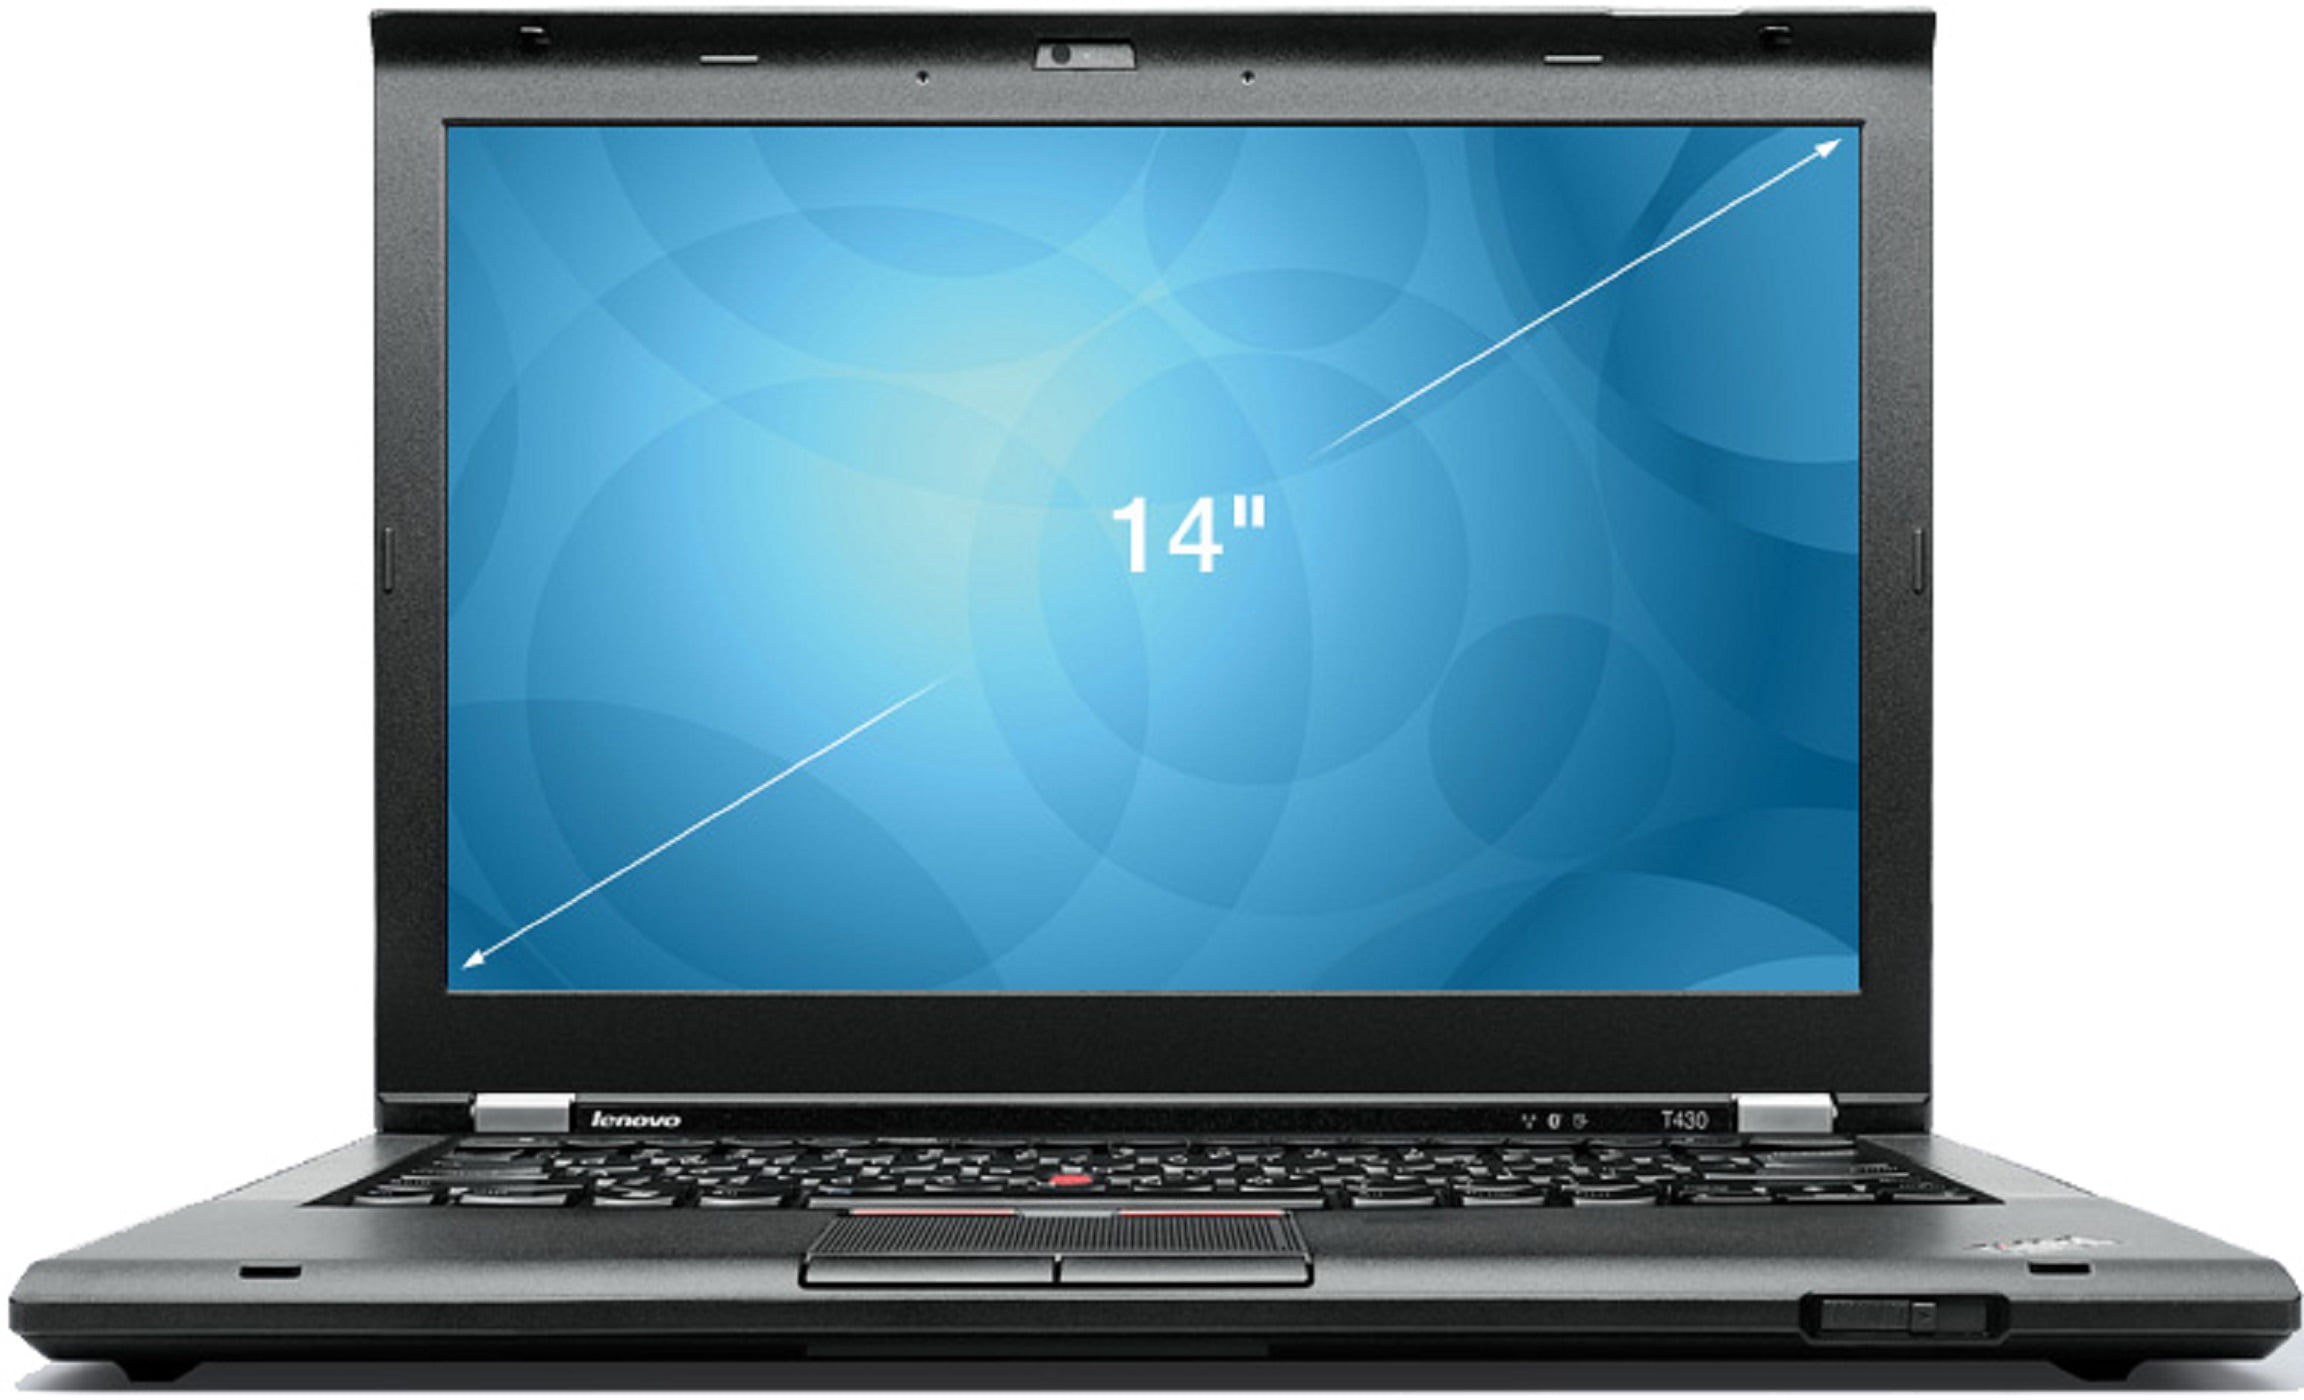 Lenovo ThinkPad i5- 3210M CPU @2.50 Ghz- 2501 Mhz- 8 GB Ram-256 GB SSD- DRW- Windows 10 Pro 64 Laptop (Reused) - Walmart.com